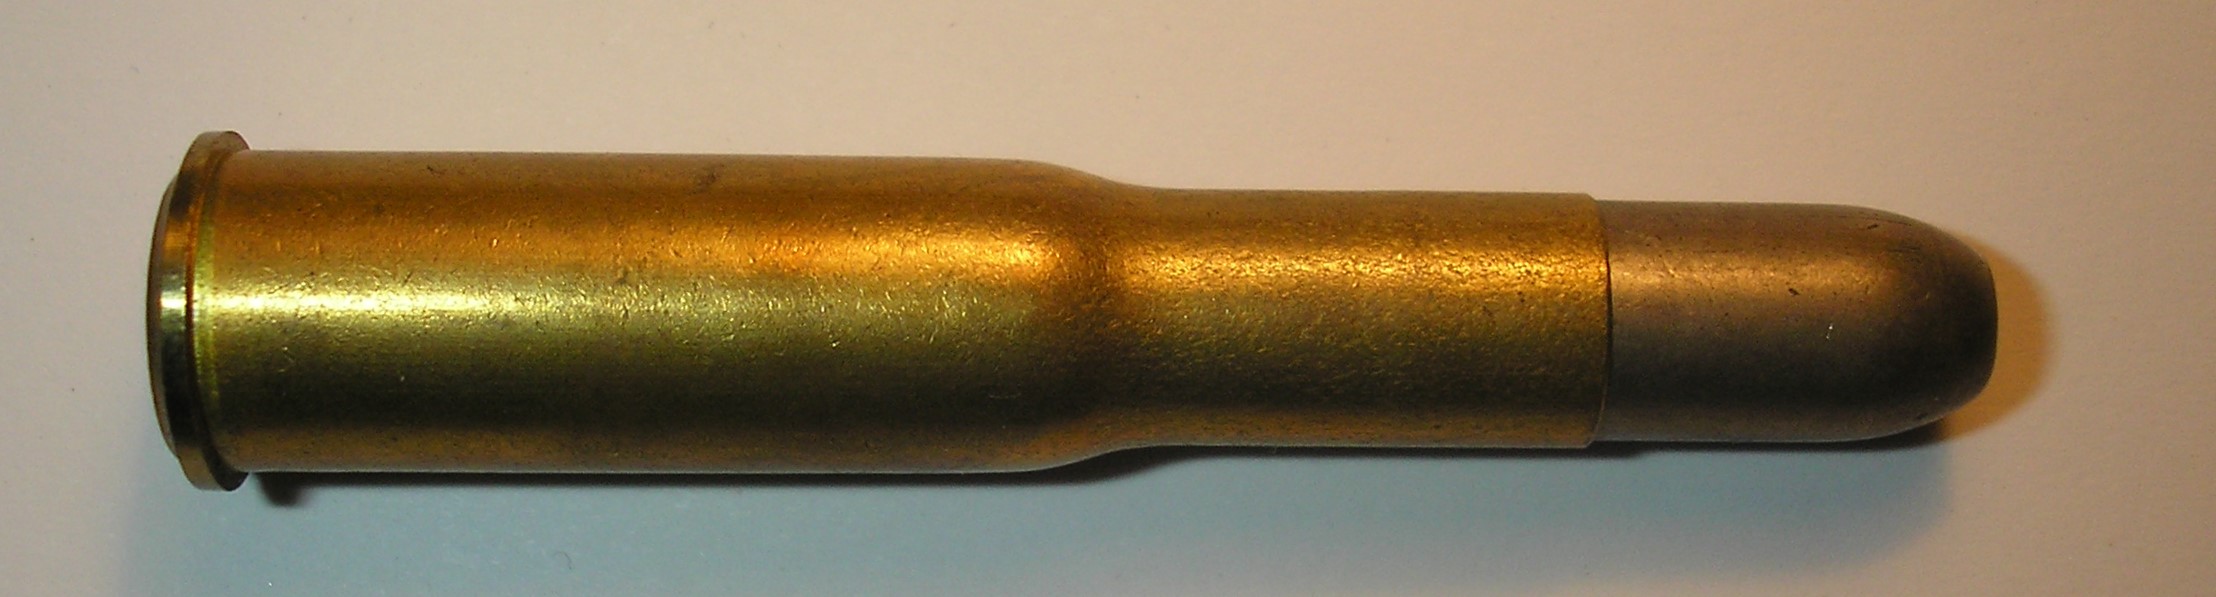 ./ammo/1015x61R/esker/Eske-1015x61R-Helmantel-10skudd-graapapir-1895-2.JPG